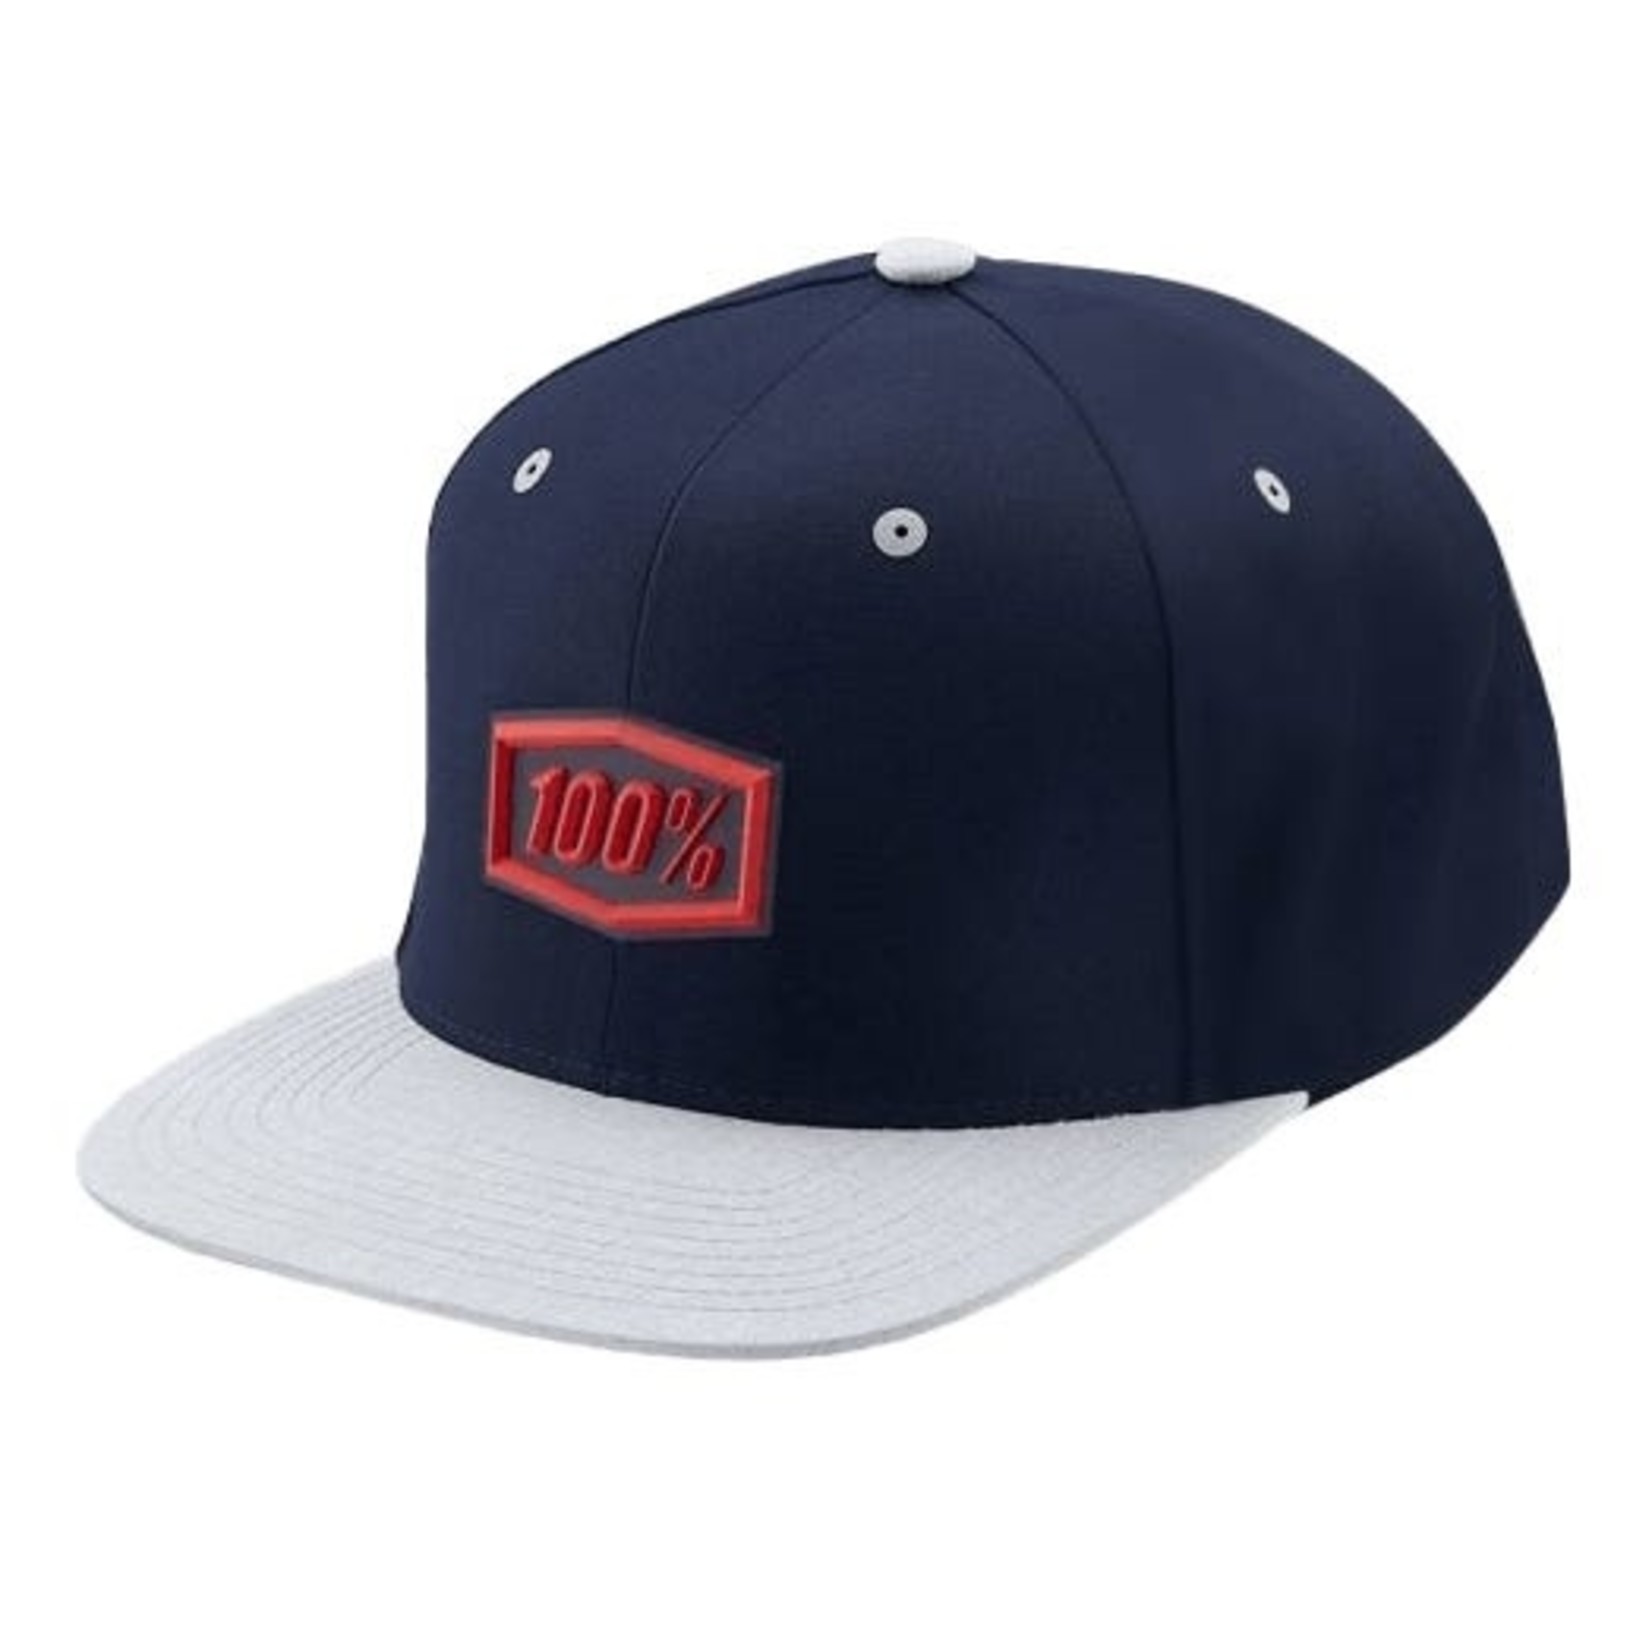 100% Terrain 100% Enterprise Snapback Hat - Navy